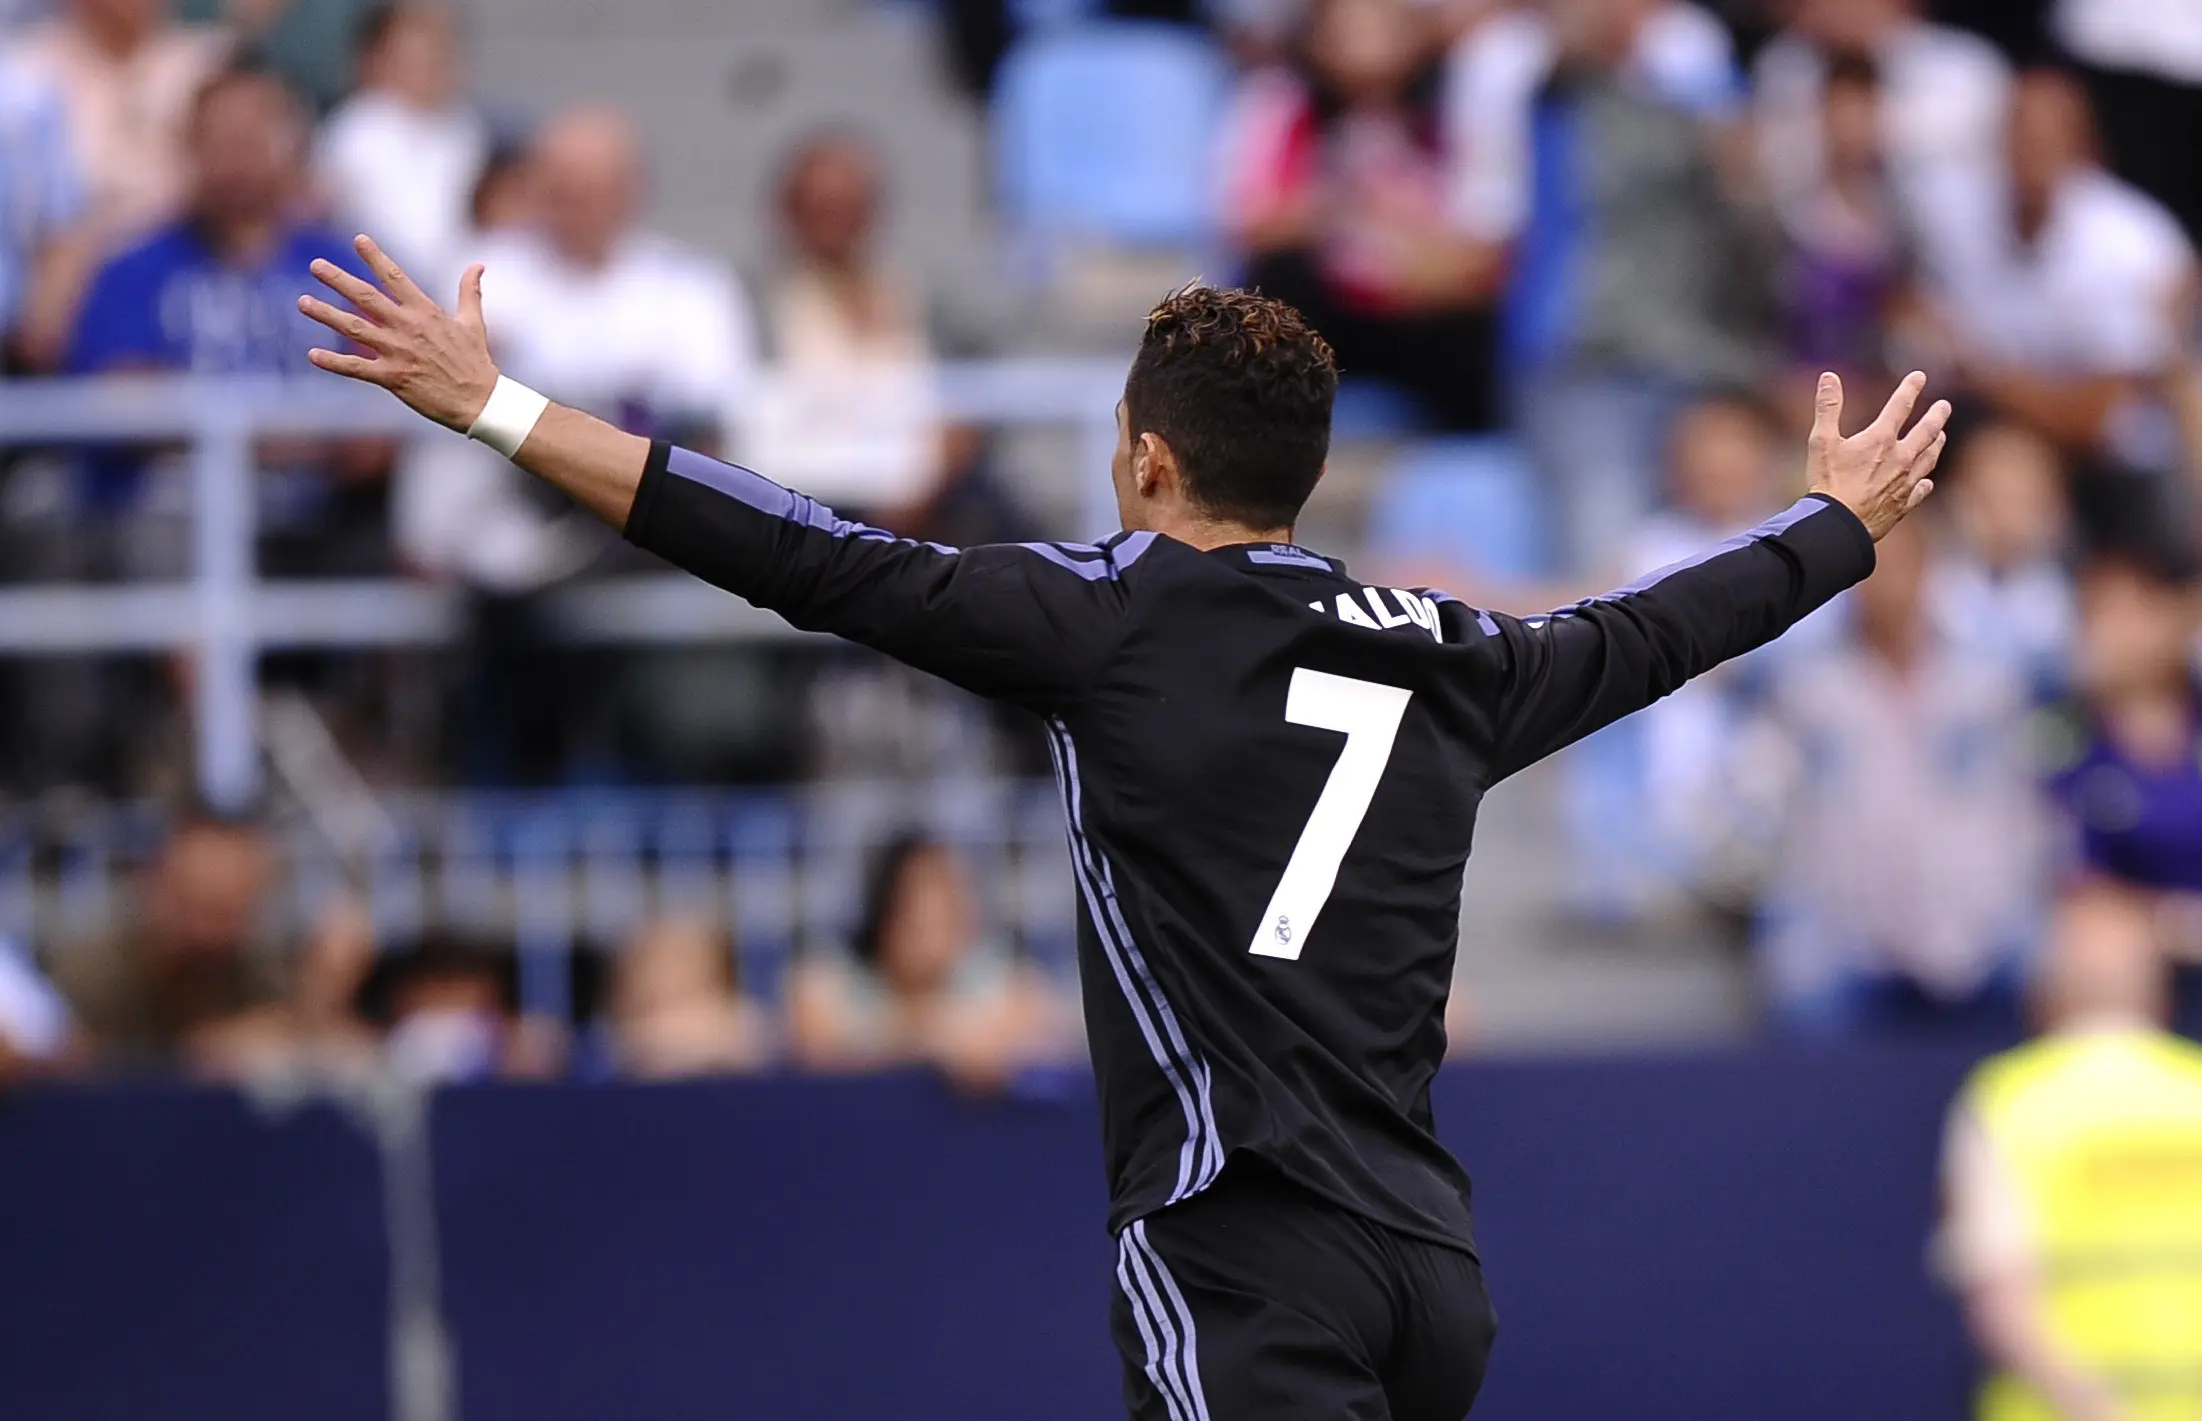 Bintang Real Madrid, Cristiano Ronaldo, rayakan gol ke gawang Malaga pada laga La Liga di Estadio La Rosaleda, Senin (22/5/2017), dinihari WIB. (AP Photo/Daniel Tejedor)